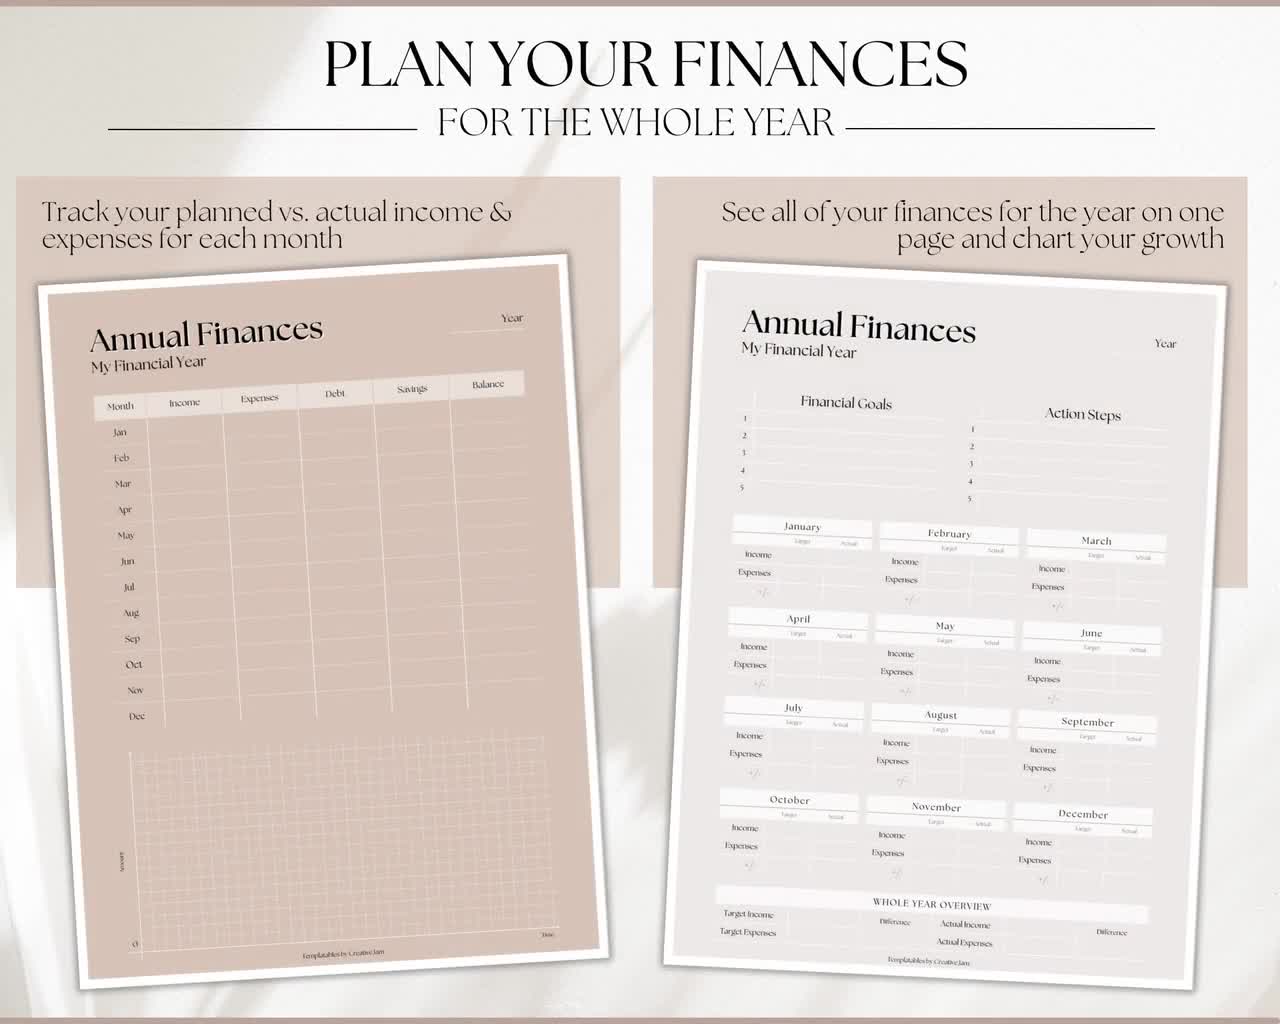 Budget Planner – LUX PRODUCTIVITY